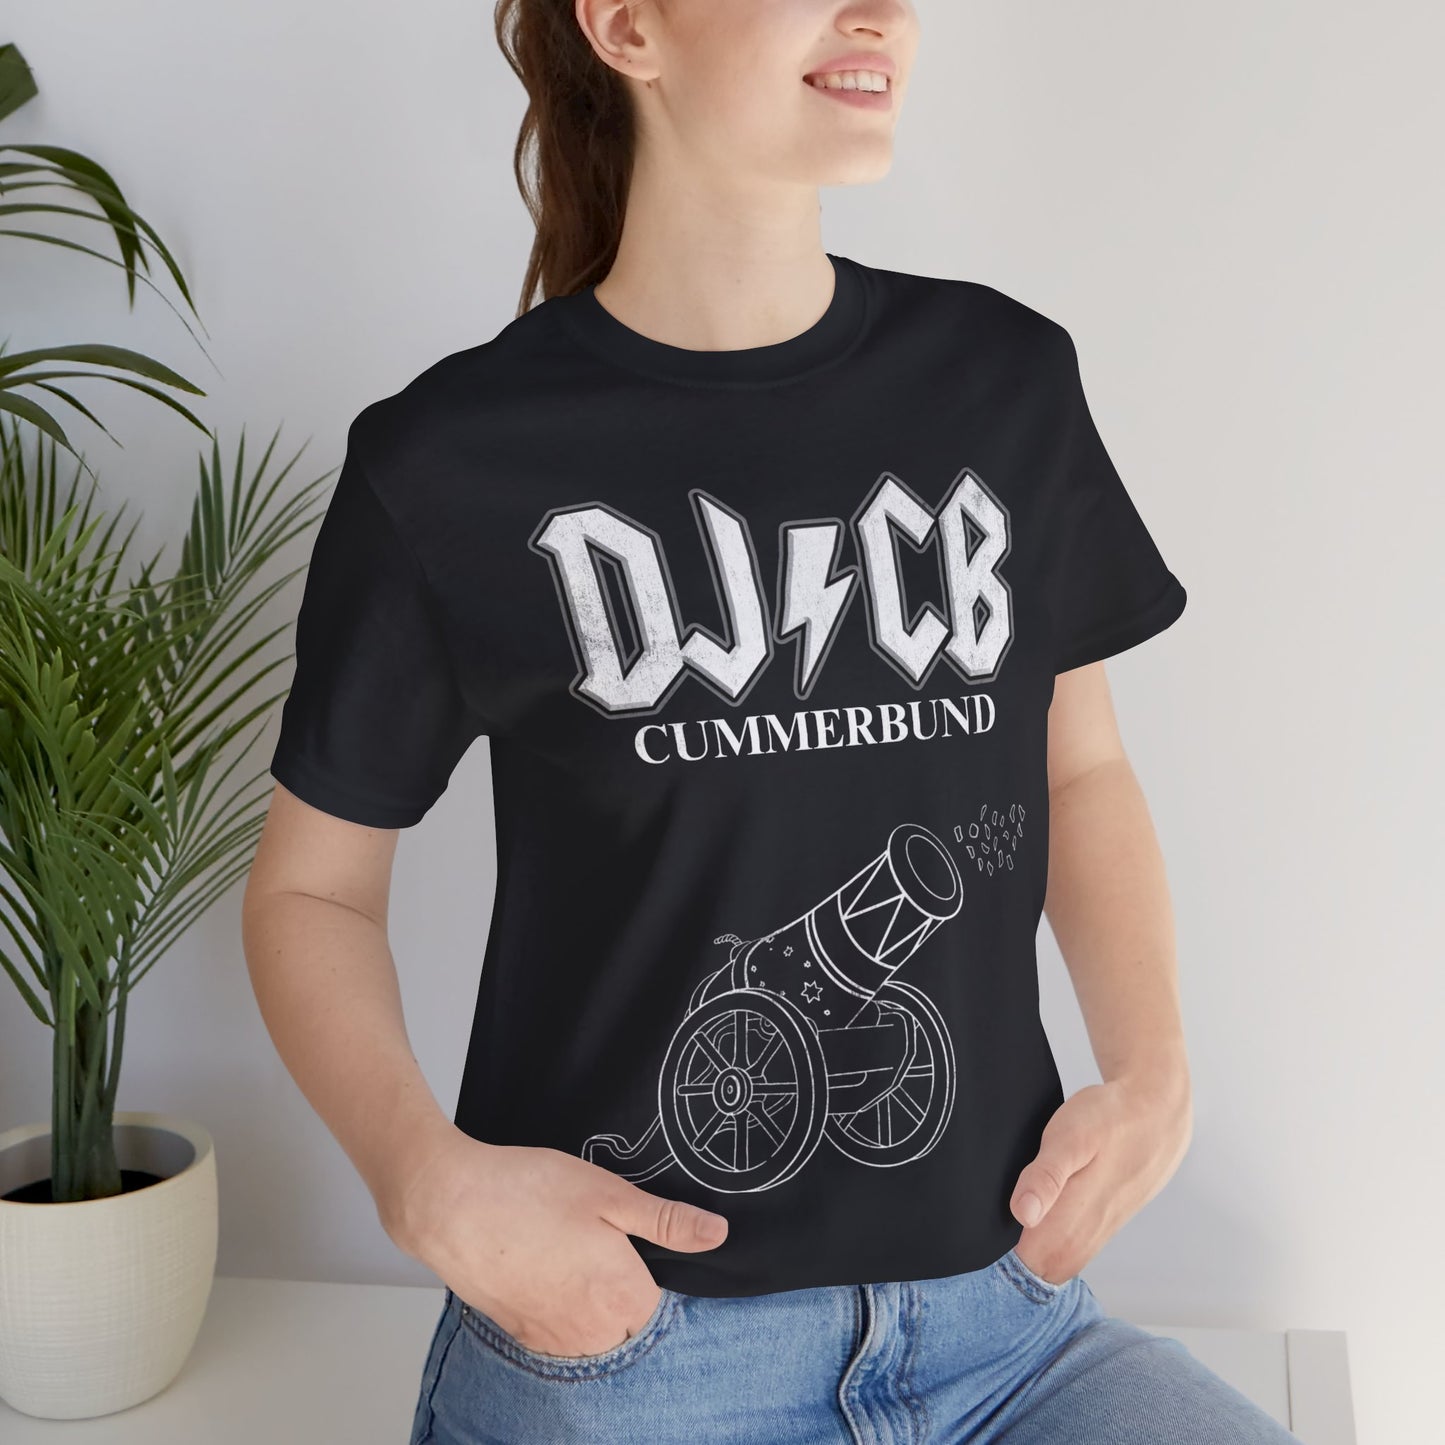 DJ/CB With Cannon Dark T-Shirt